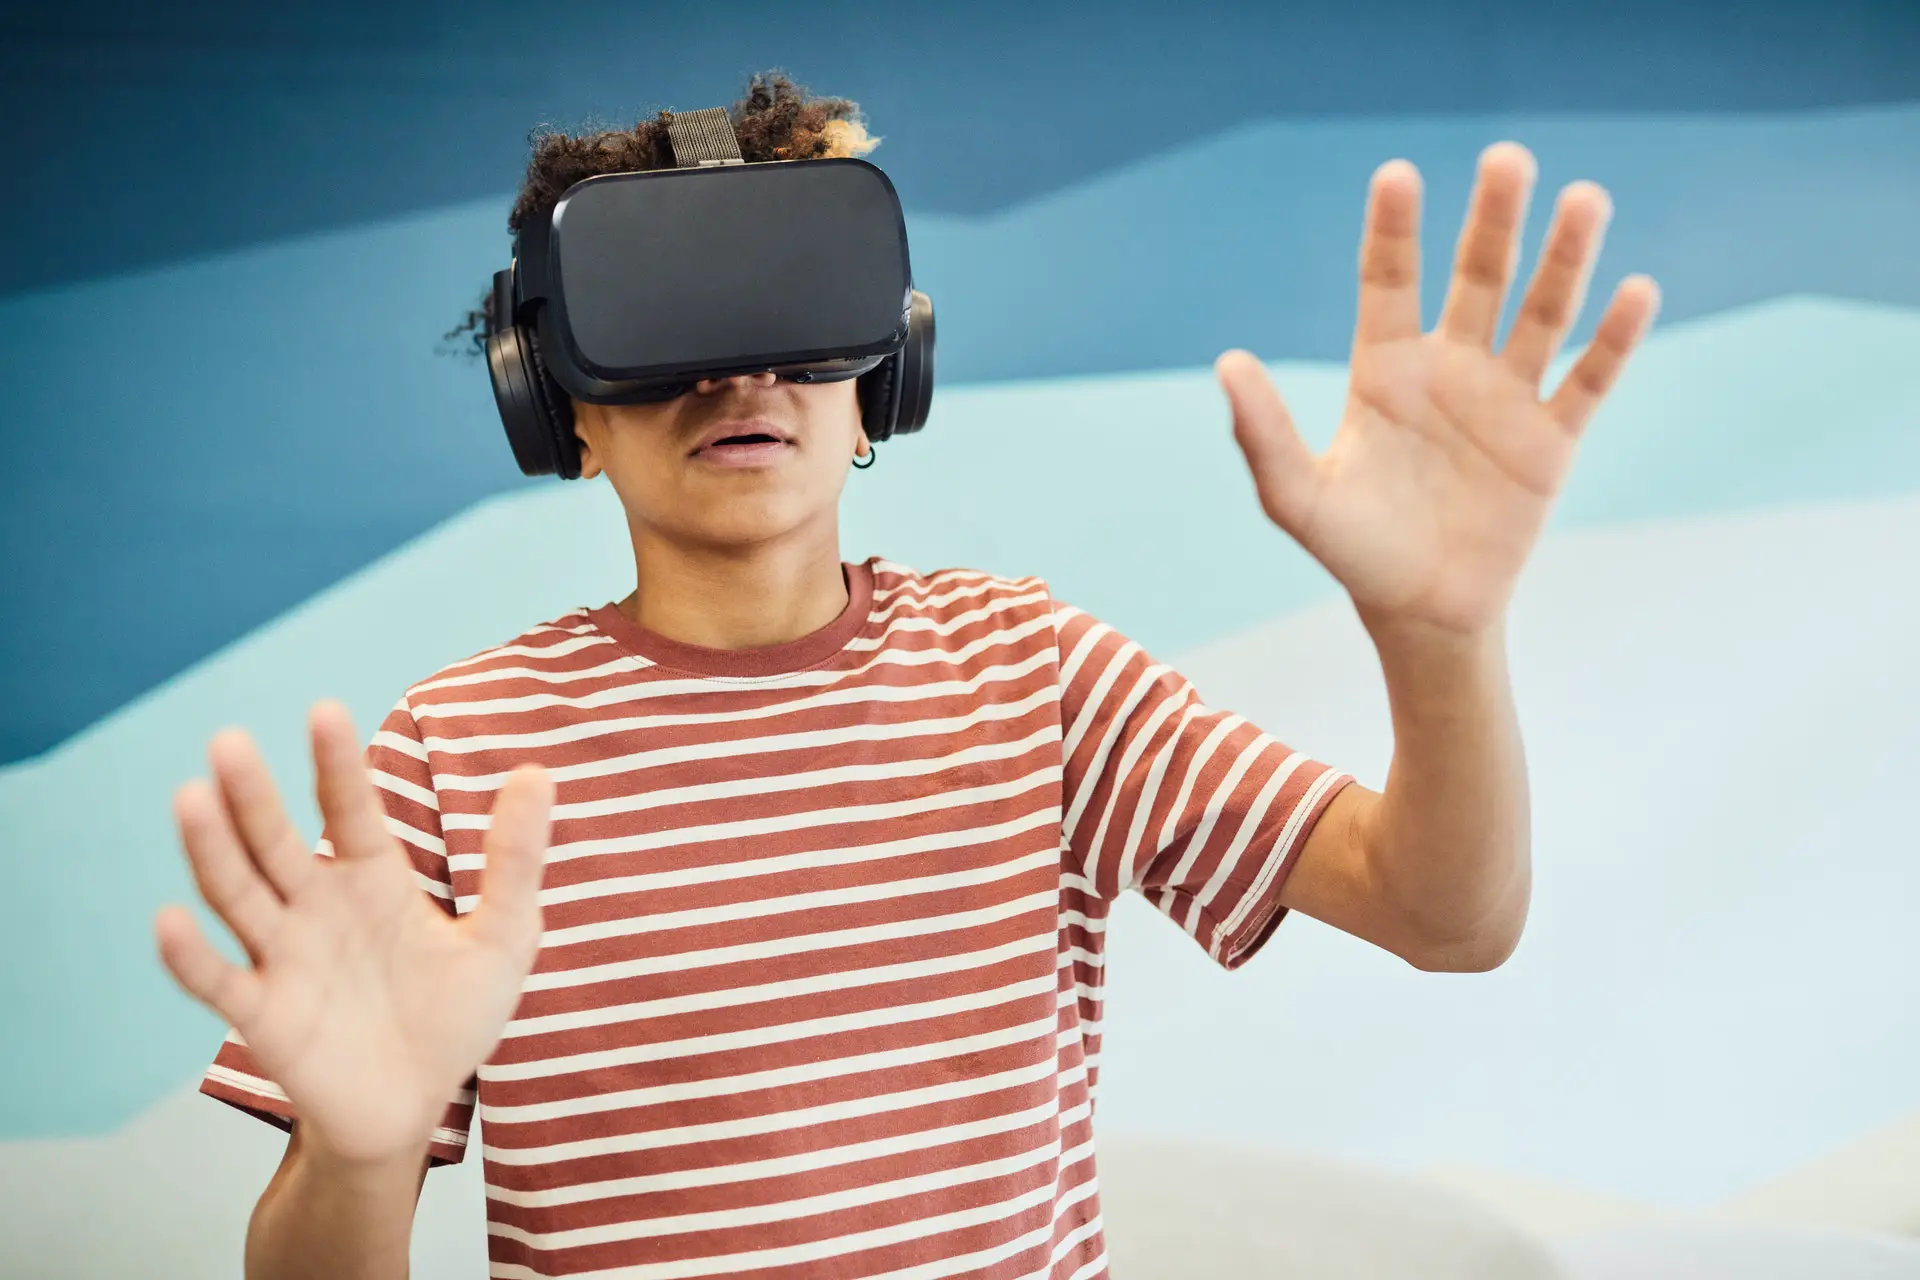 Camp K12 Introduces Hatch Kids, an AR/VR, Metaverse Creation Platform for Kids